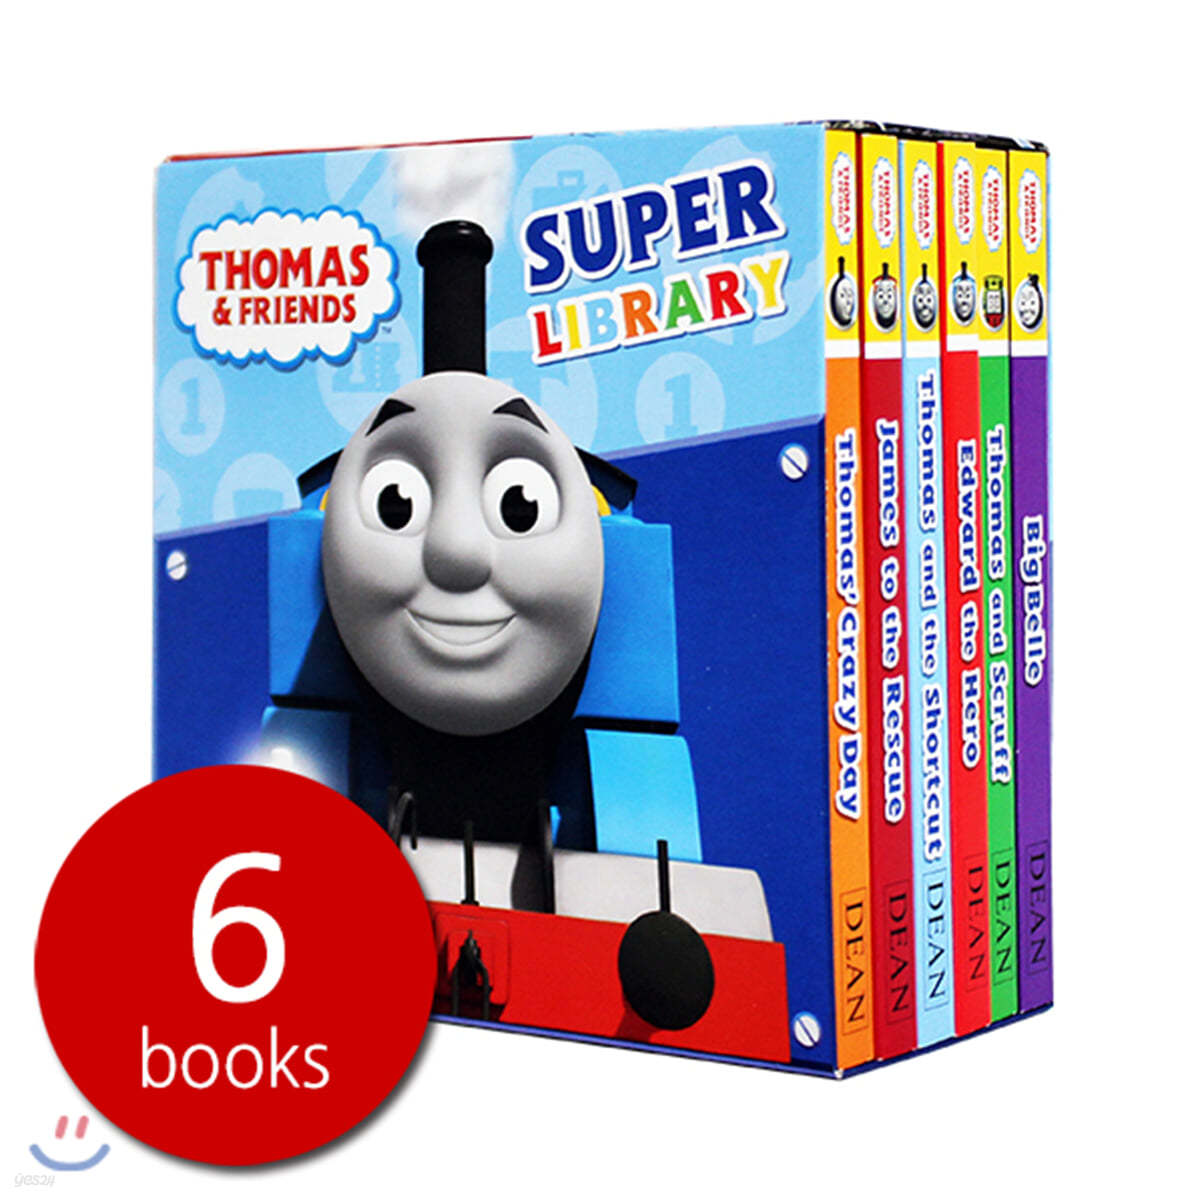 Thomas & Friends Super Library 6 Books Set  : 토마스와 친구들 슈퍼 라이브러리 북 세트